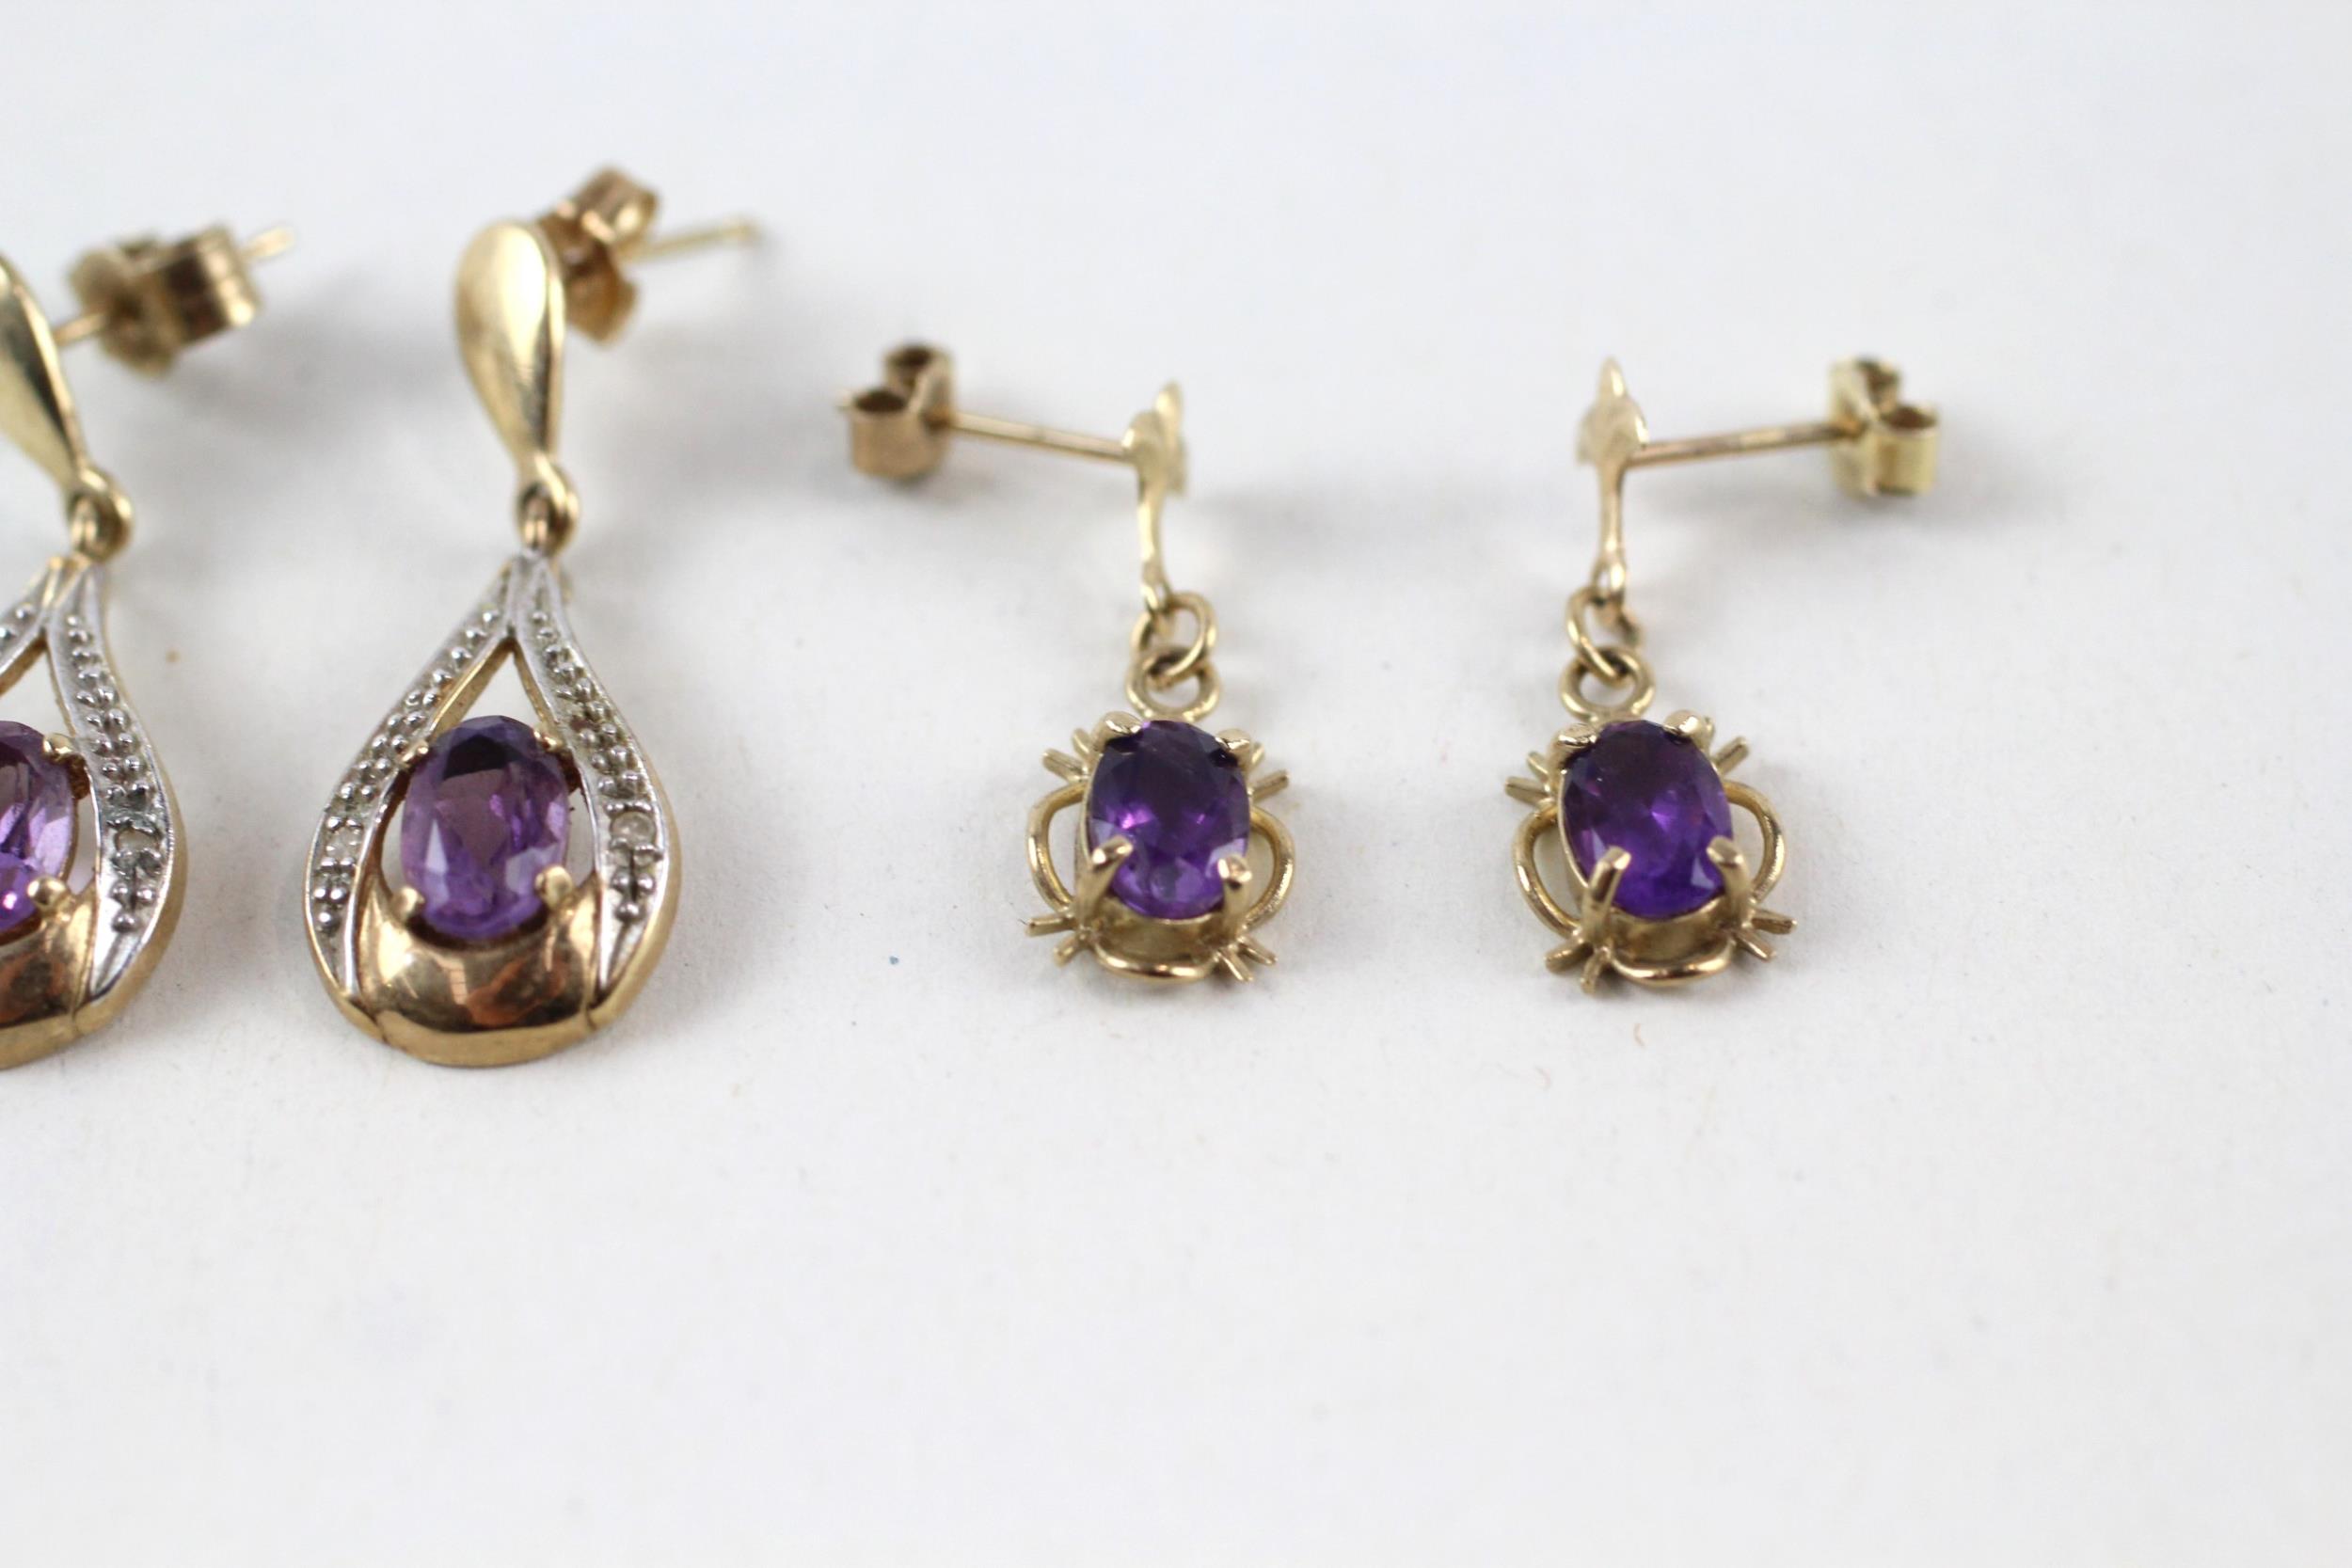 2x 9ct gold amethyst & diamond drop earrings (3g) - Image 4 of 5